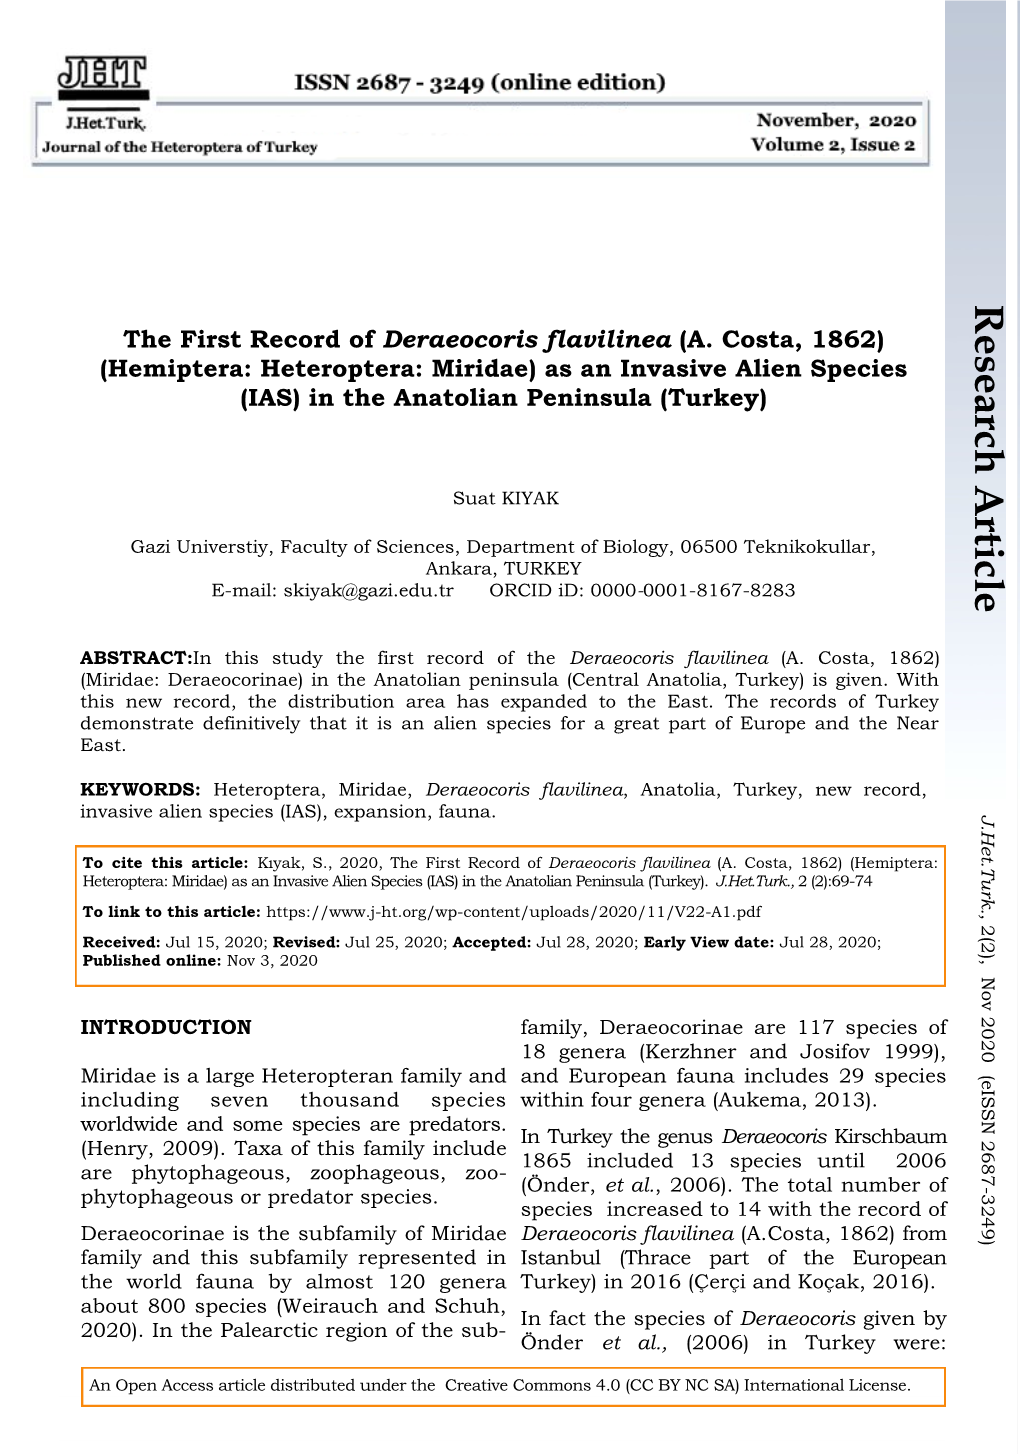 Research Article the First Record of Deraeocoris Flavilinea (A